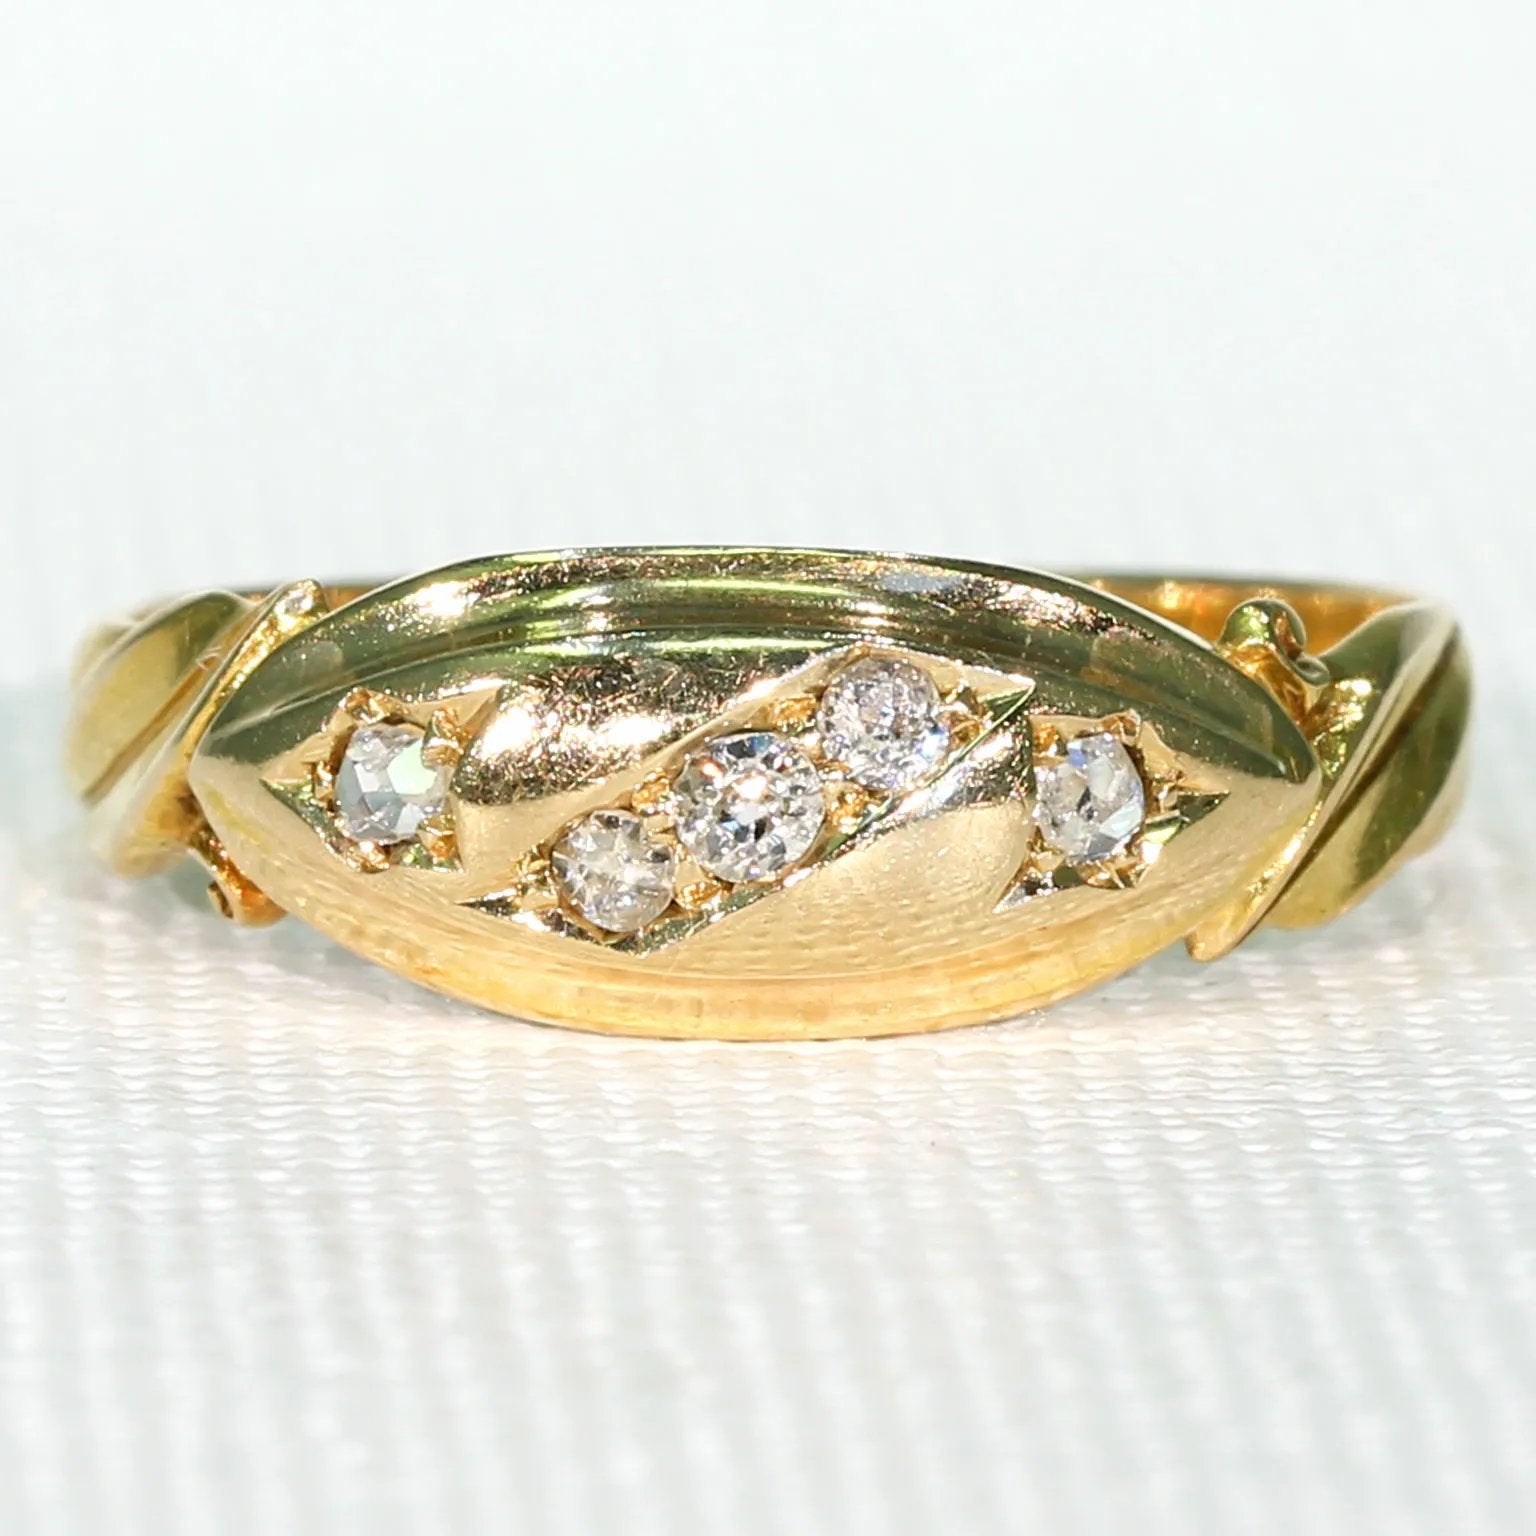 Victorian 5 Stone Diamond Ring in 18k Gold